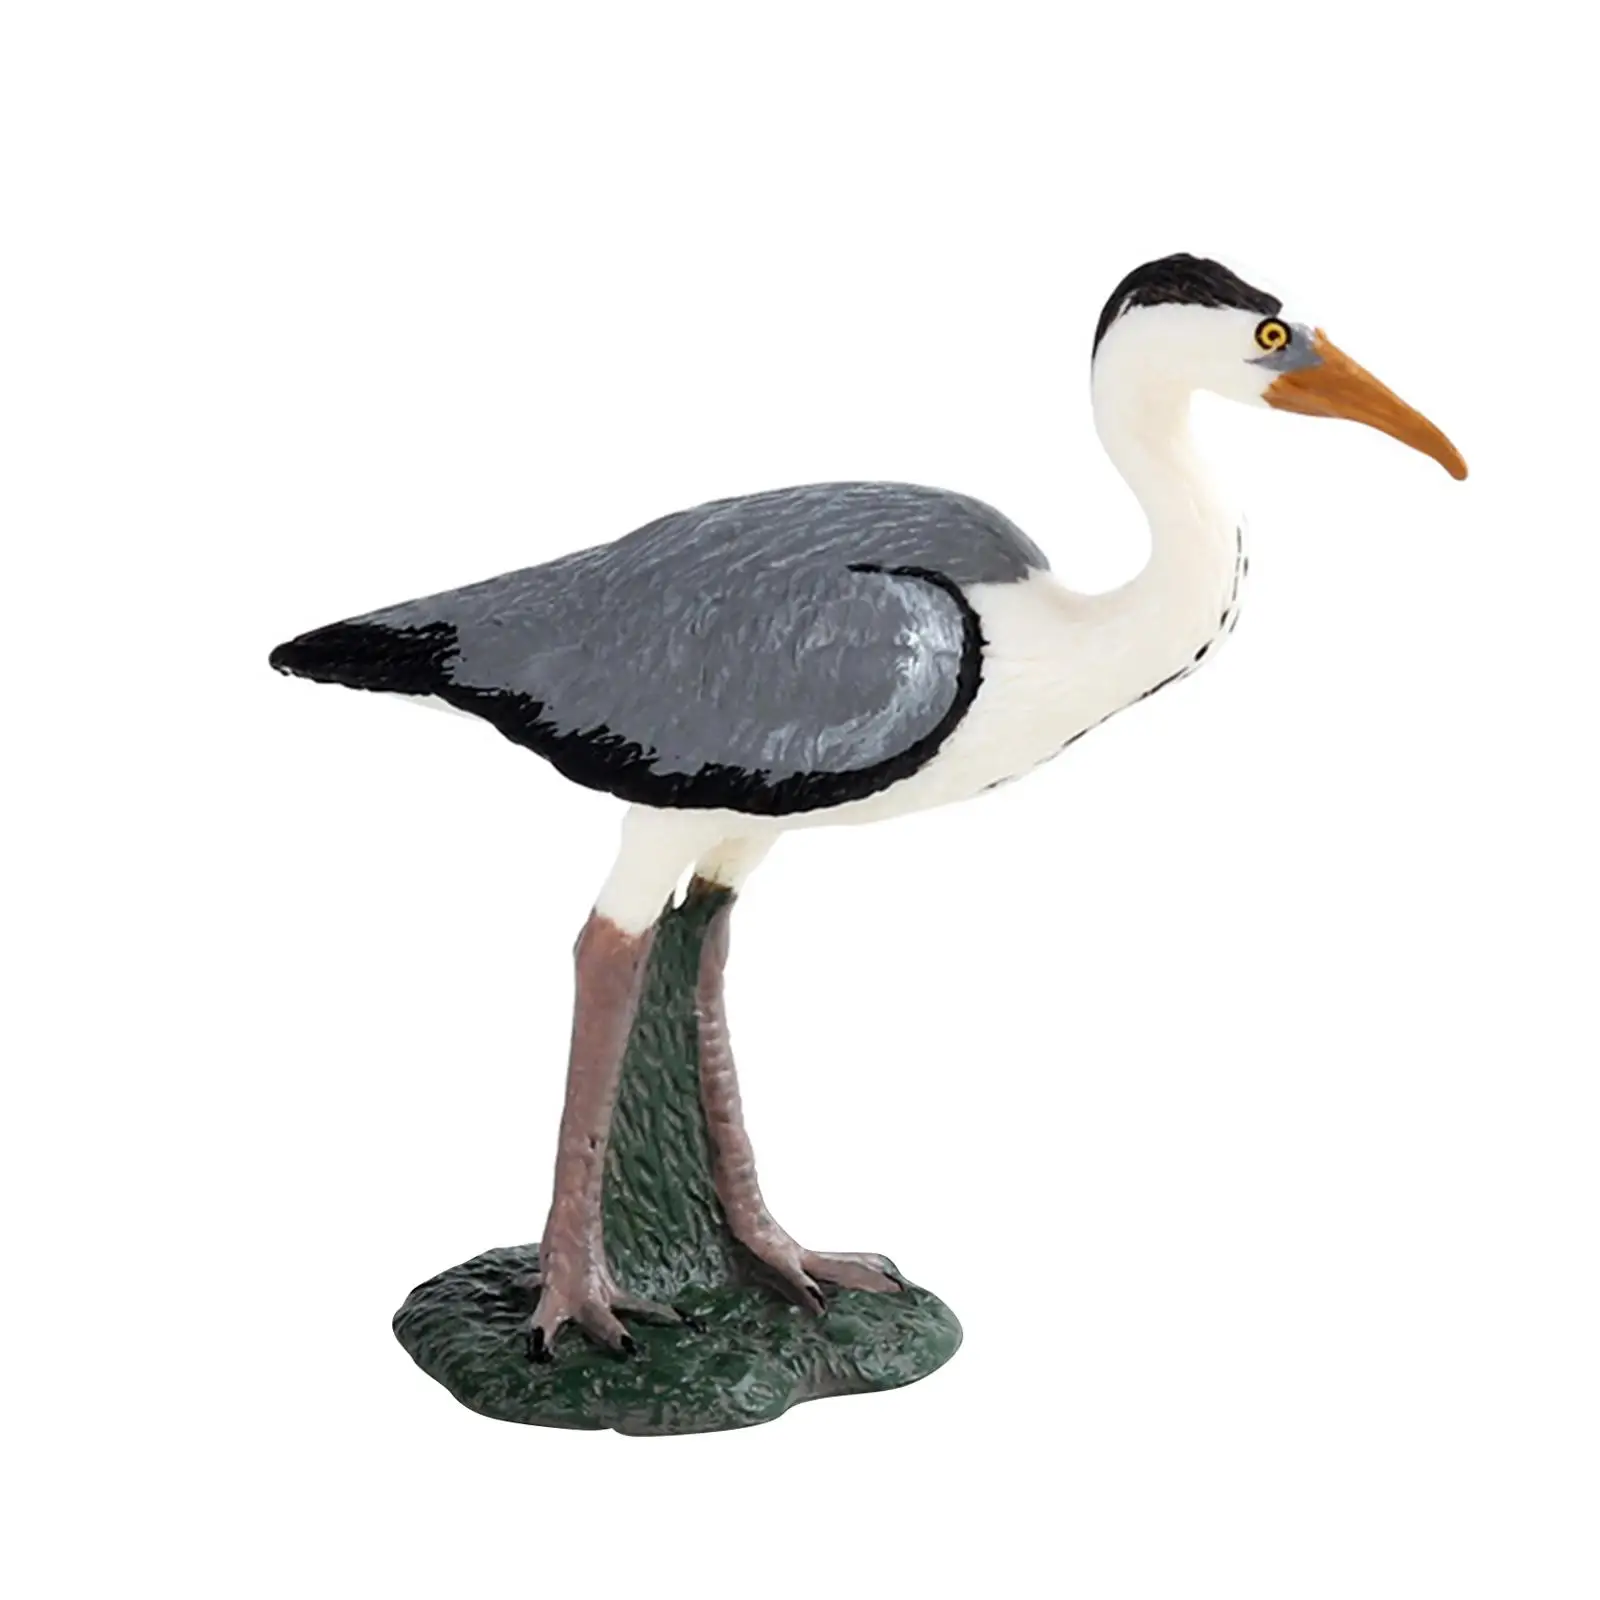 Simulation Bird Statue Bird Figurines Animals Birds Model DIY Crafts Sculpture for Backyard Garden Lawn Home Decoration